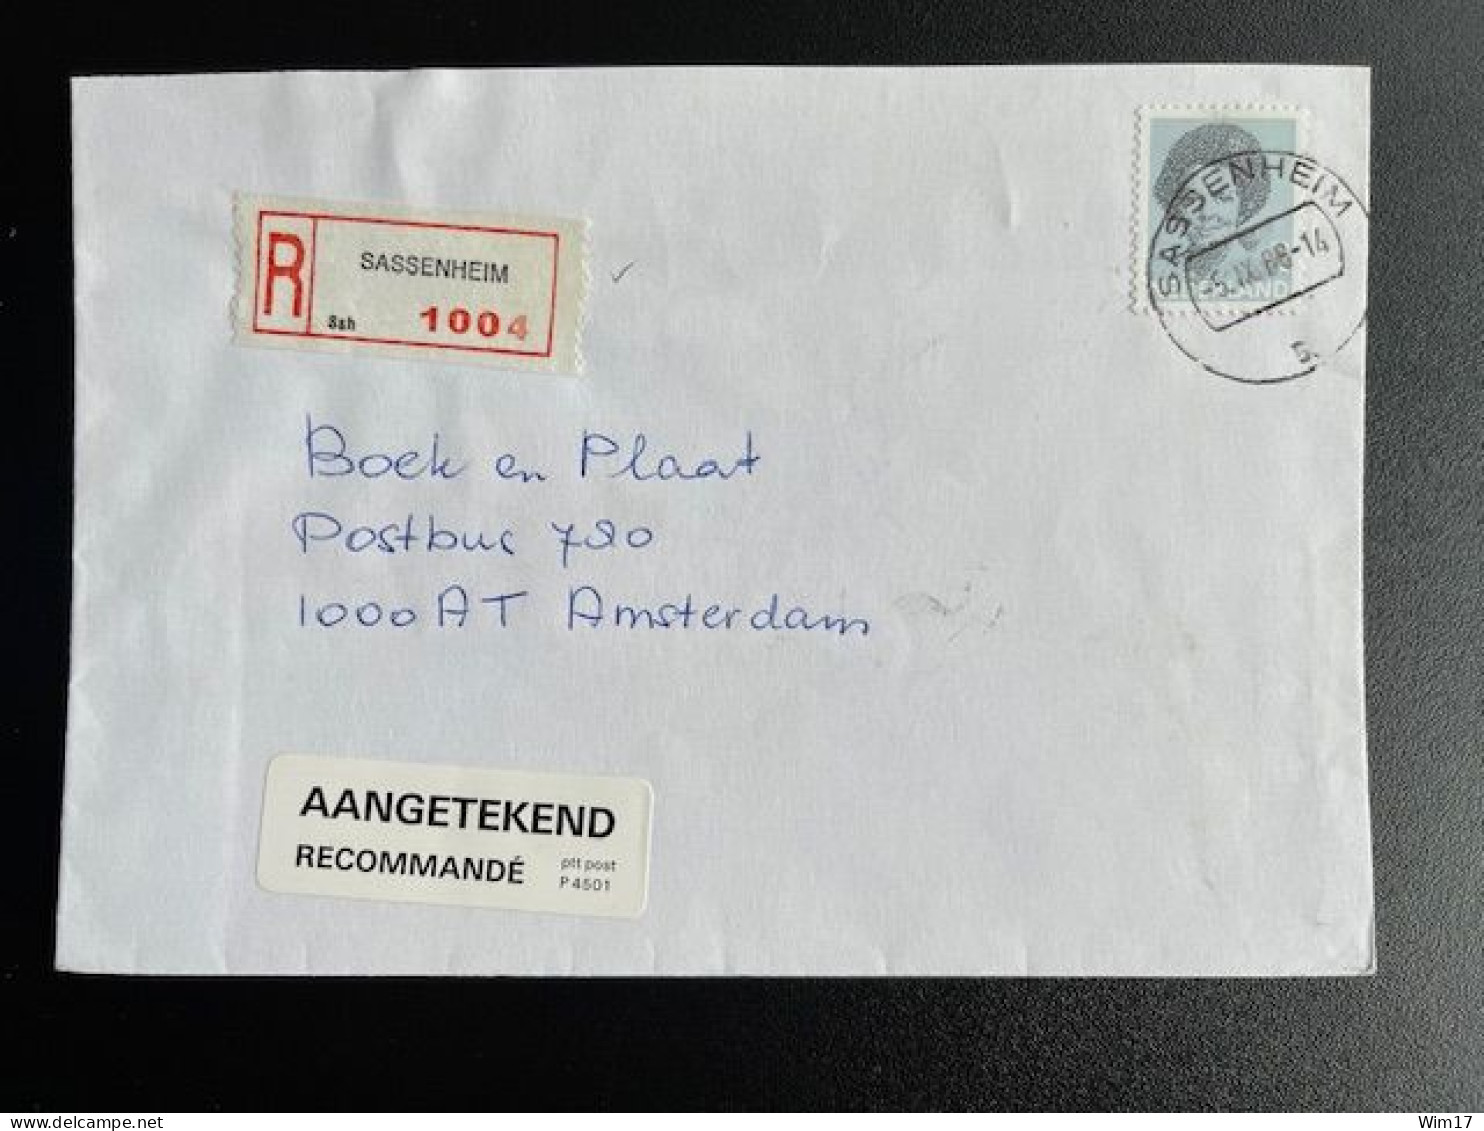 NETHERLANDS 1988 REGISTERED LETTER SASSENHEIM TO AMSTERDAM 05-09-1988 NEDERLAND AANGETEKEND - Lettres & Documents